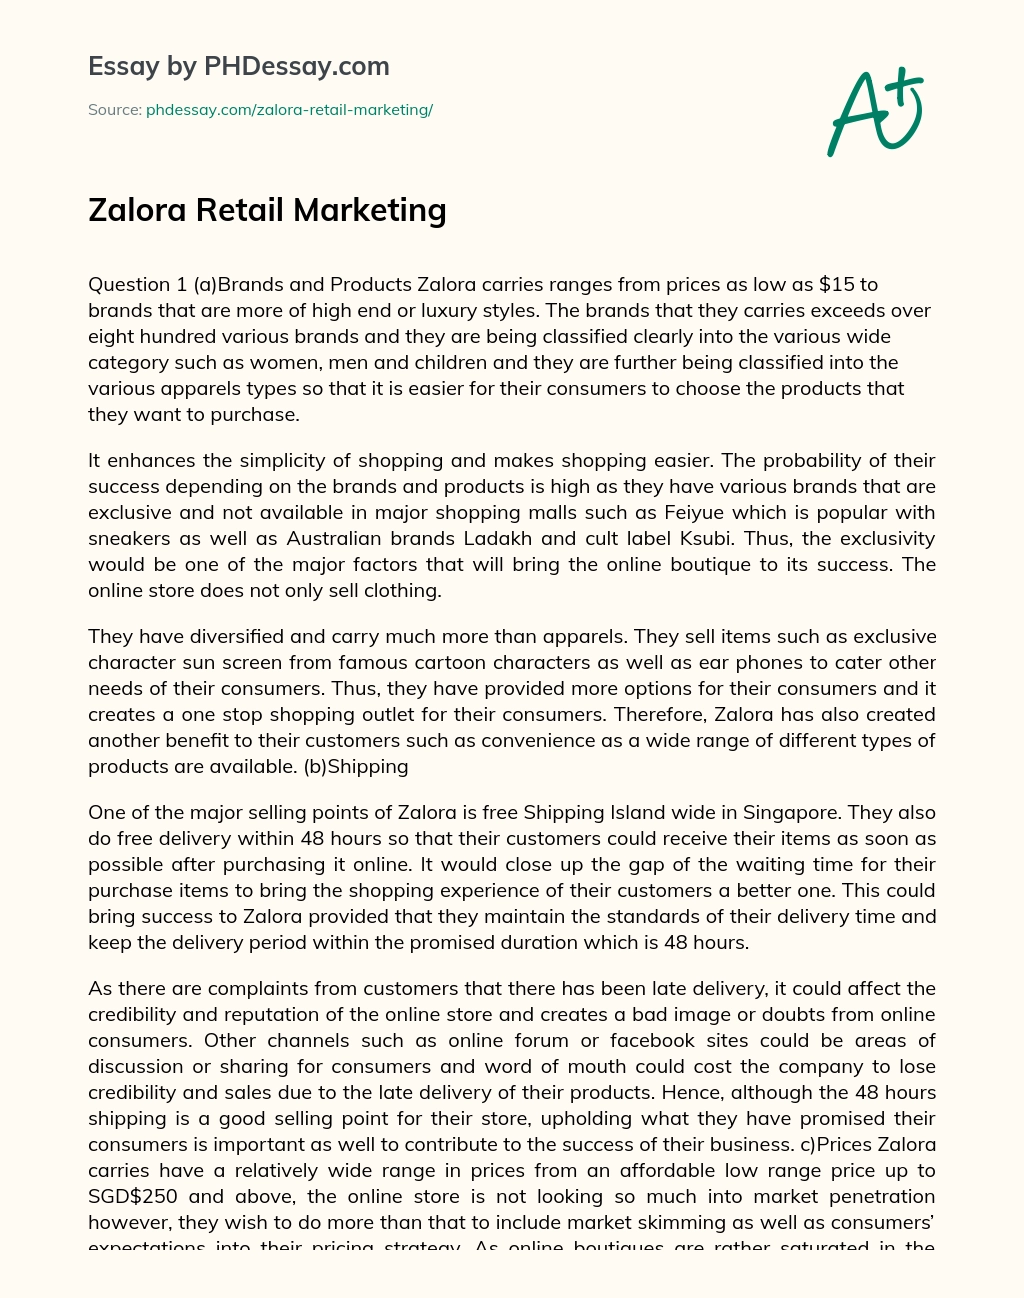 Zalora Retail Marketing essay